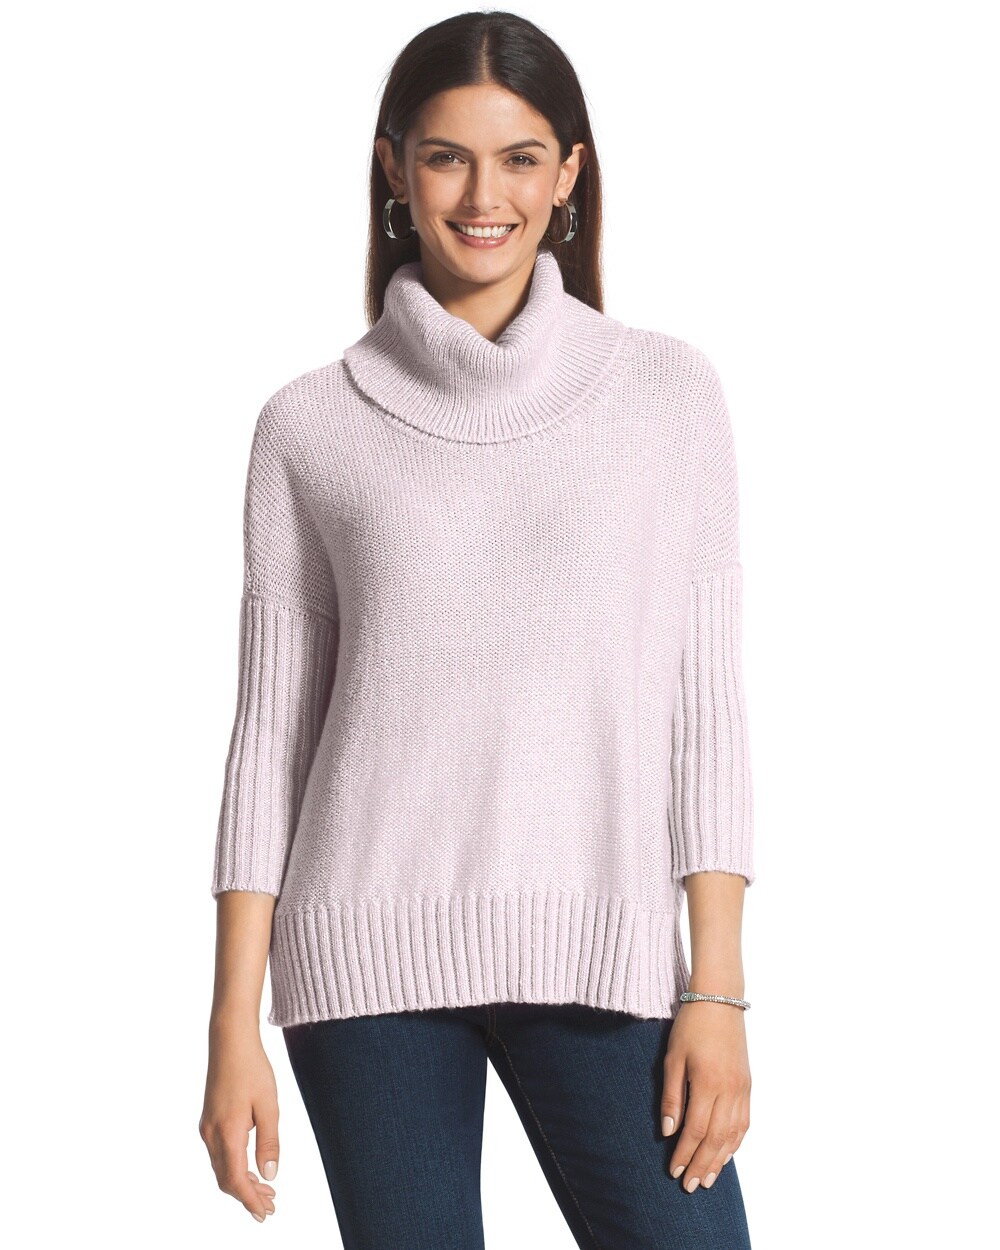 Celine Cowl Neck Sweater